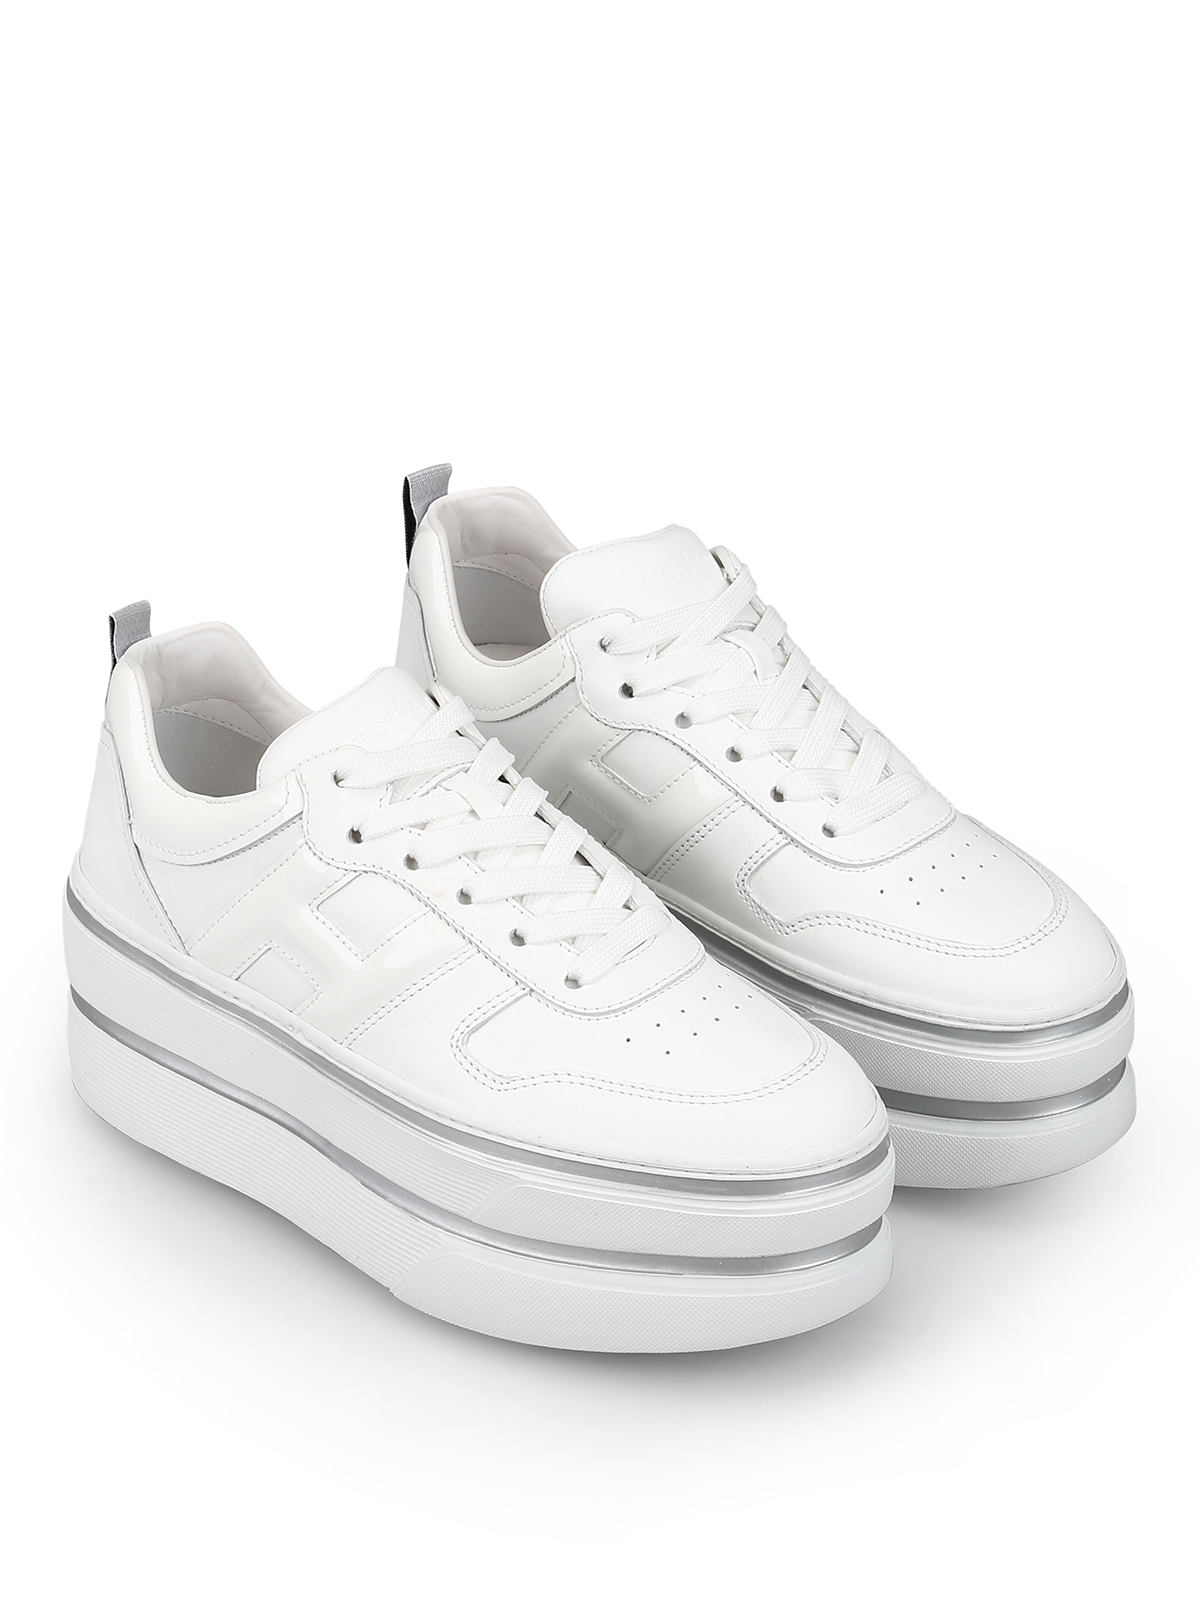 Hogan - White platform sneakers 